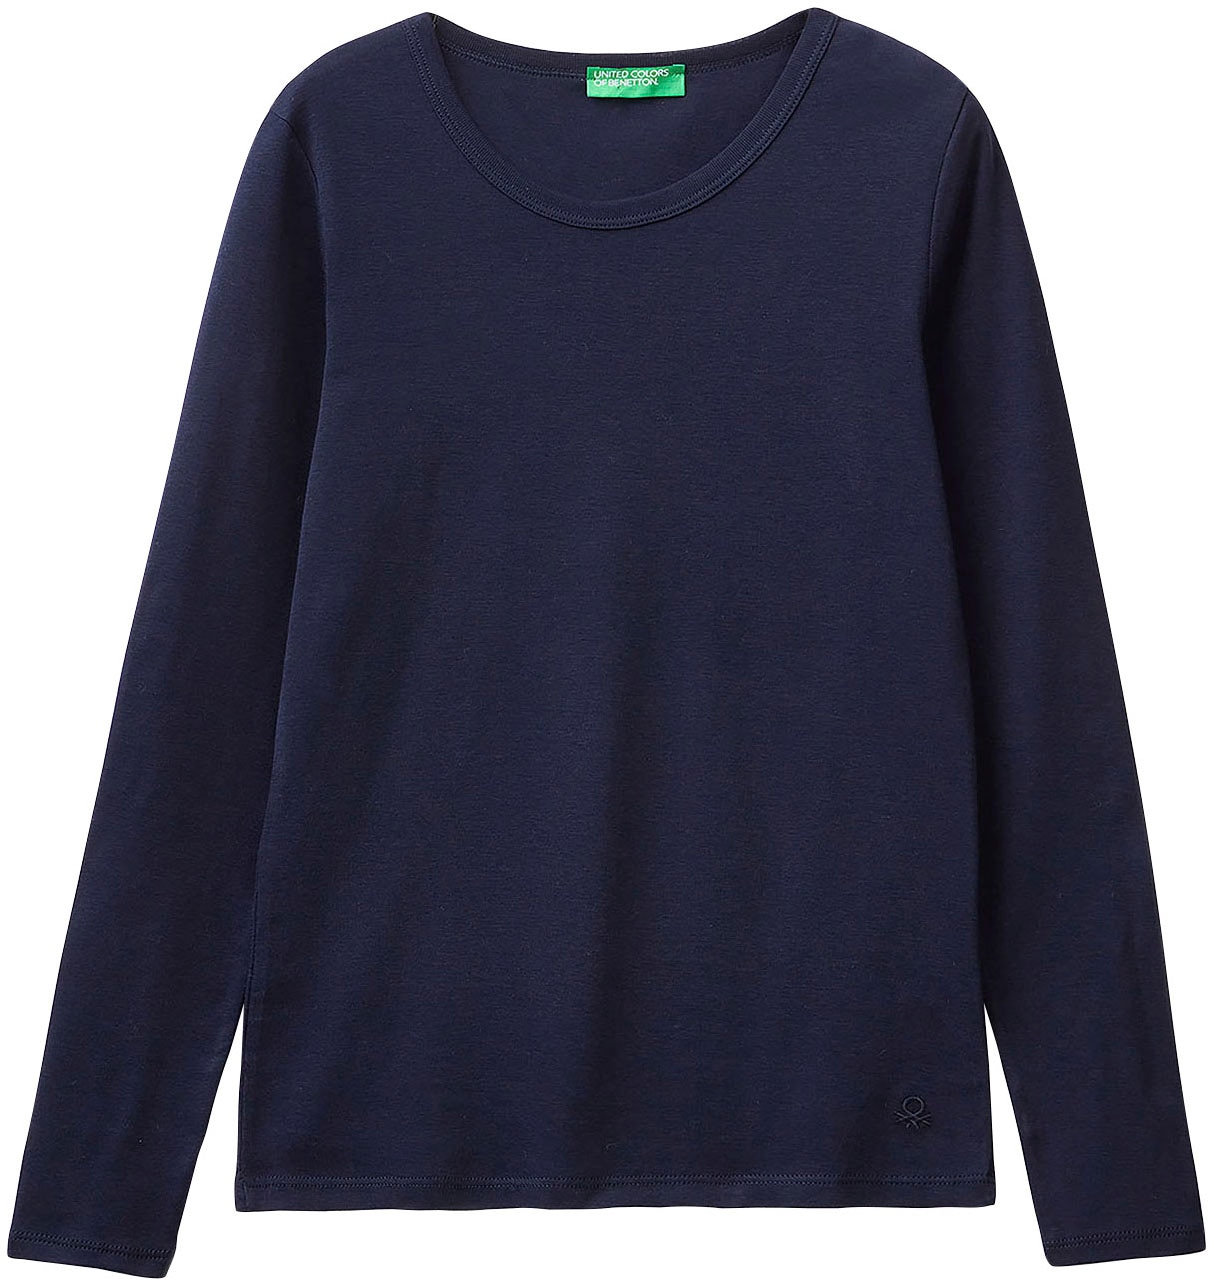 Basic-Look bei United bestellen im Colors online OTTO of Benetton Langarmshirt,